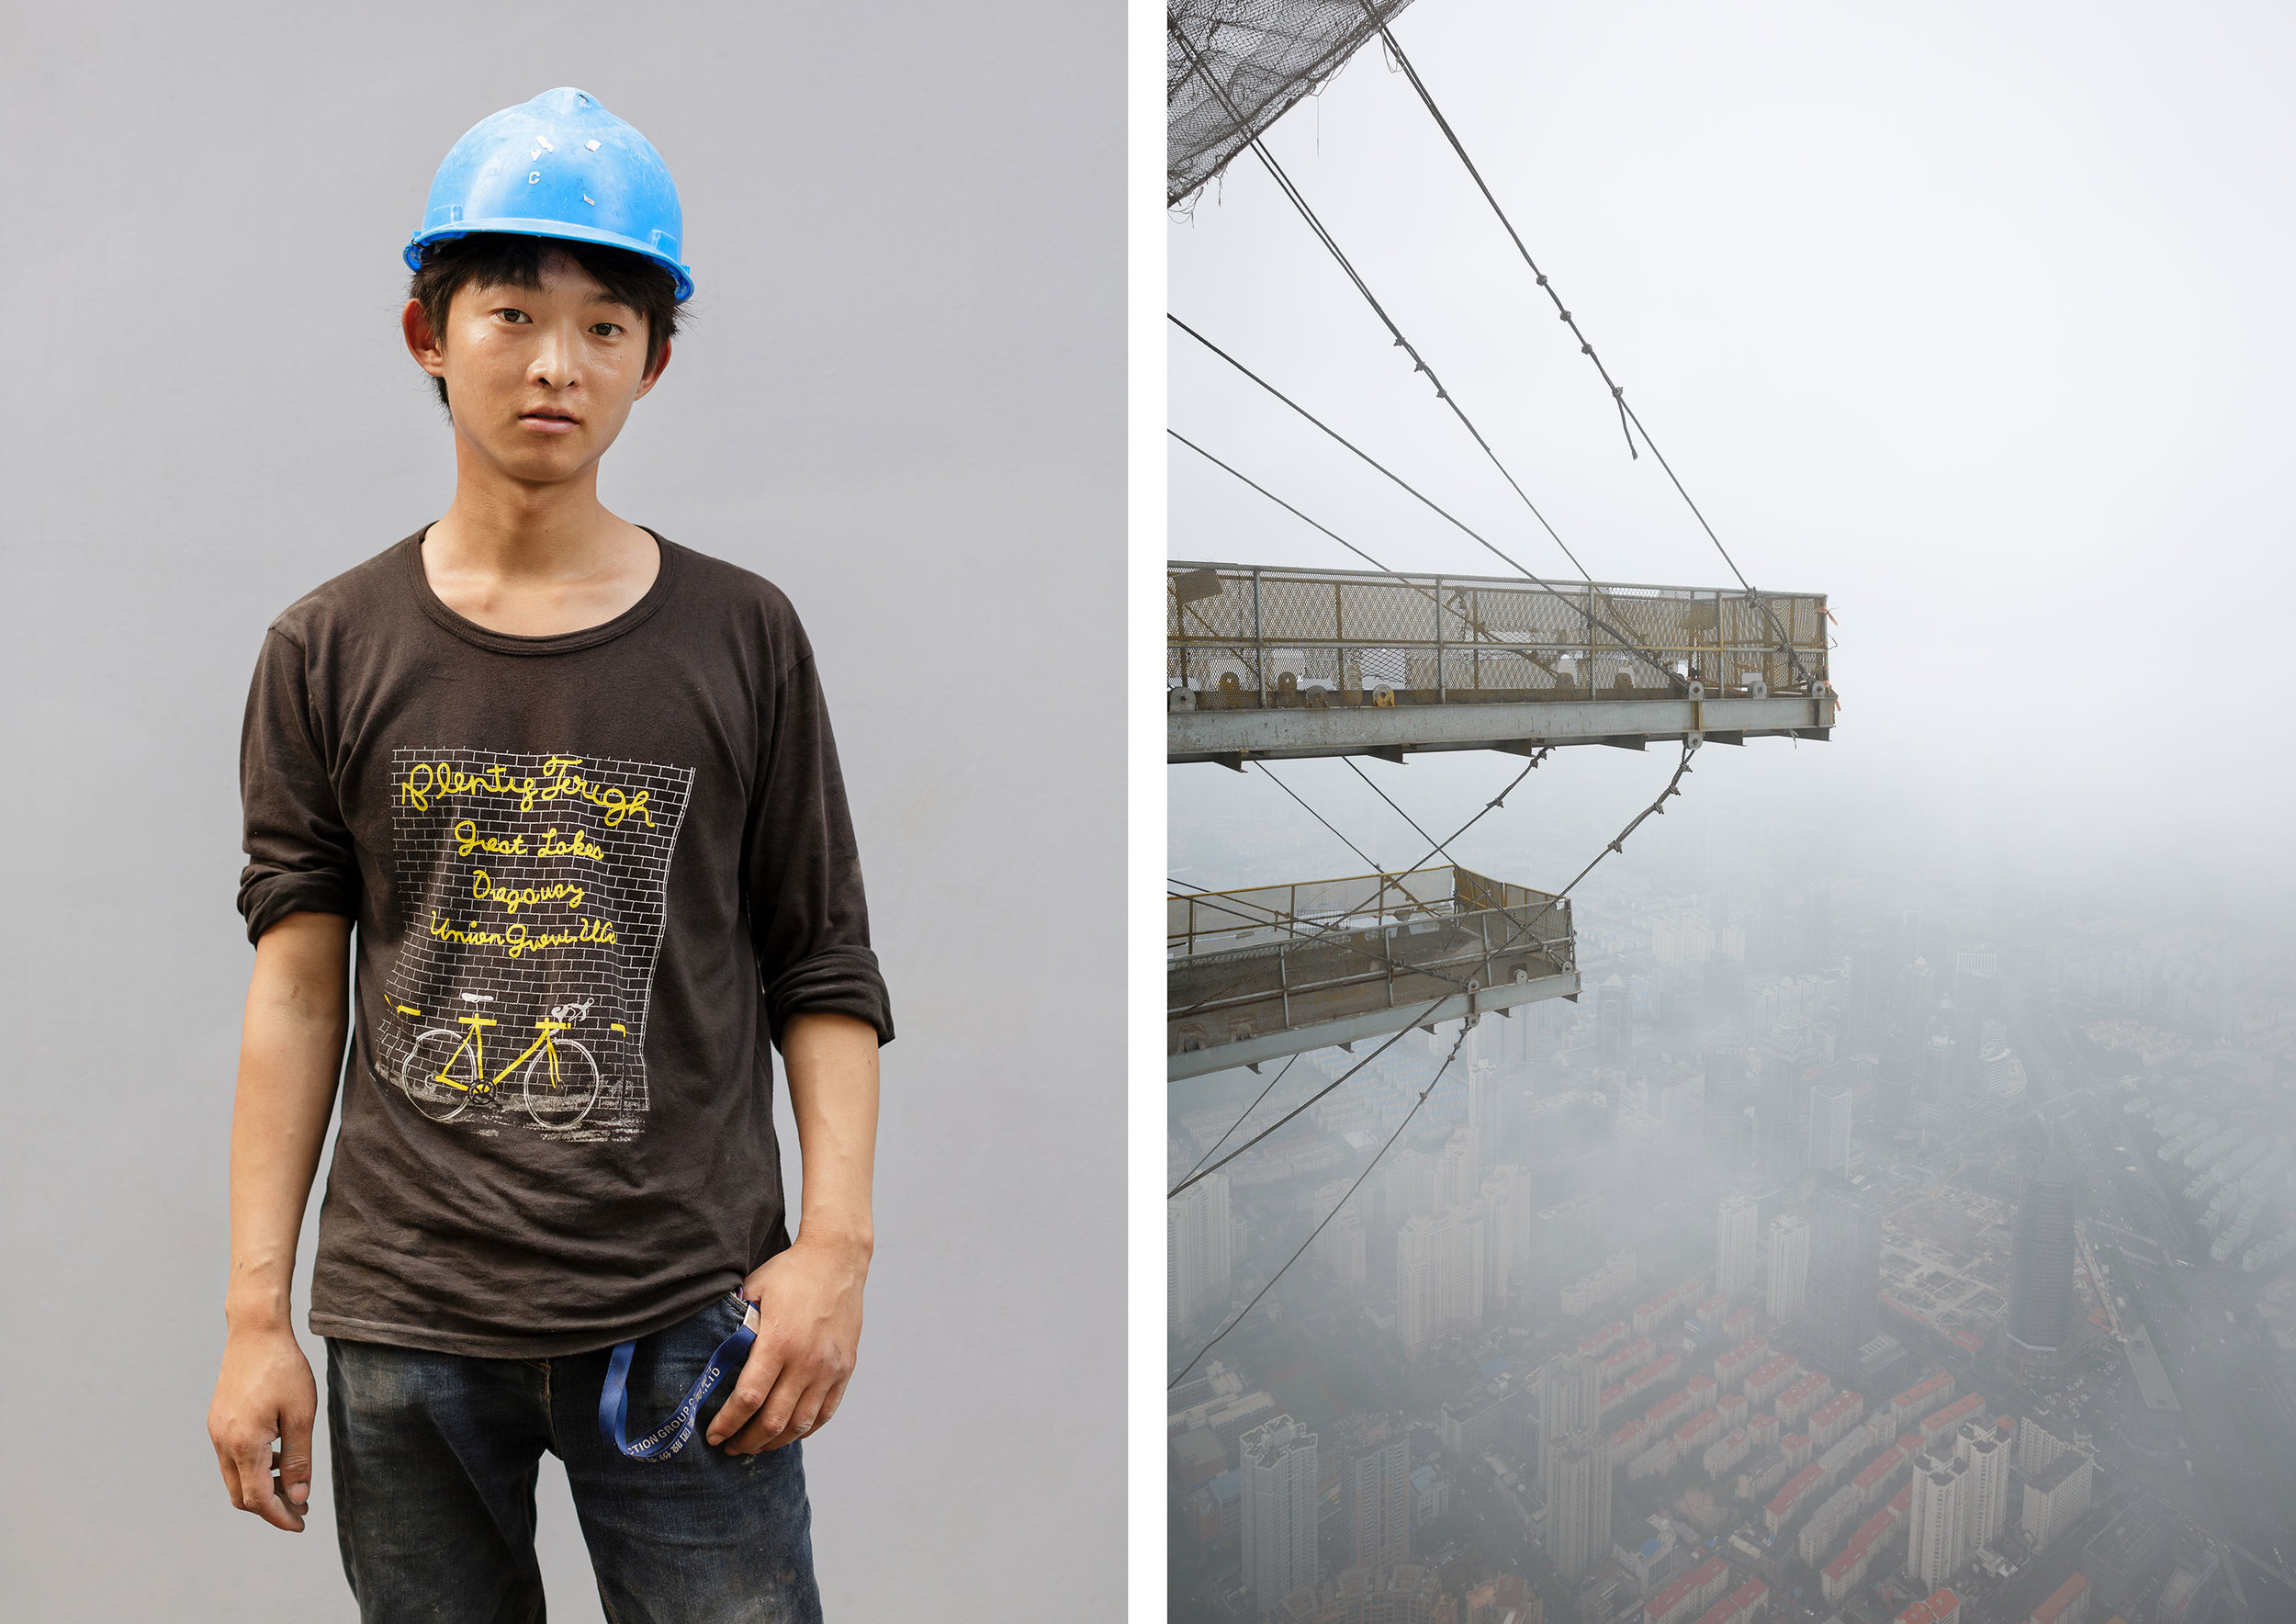 Shanghai_Tower-workers-and-building2.jpg